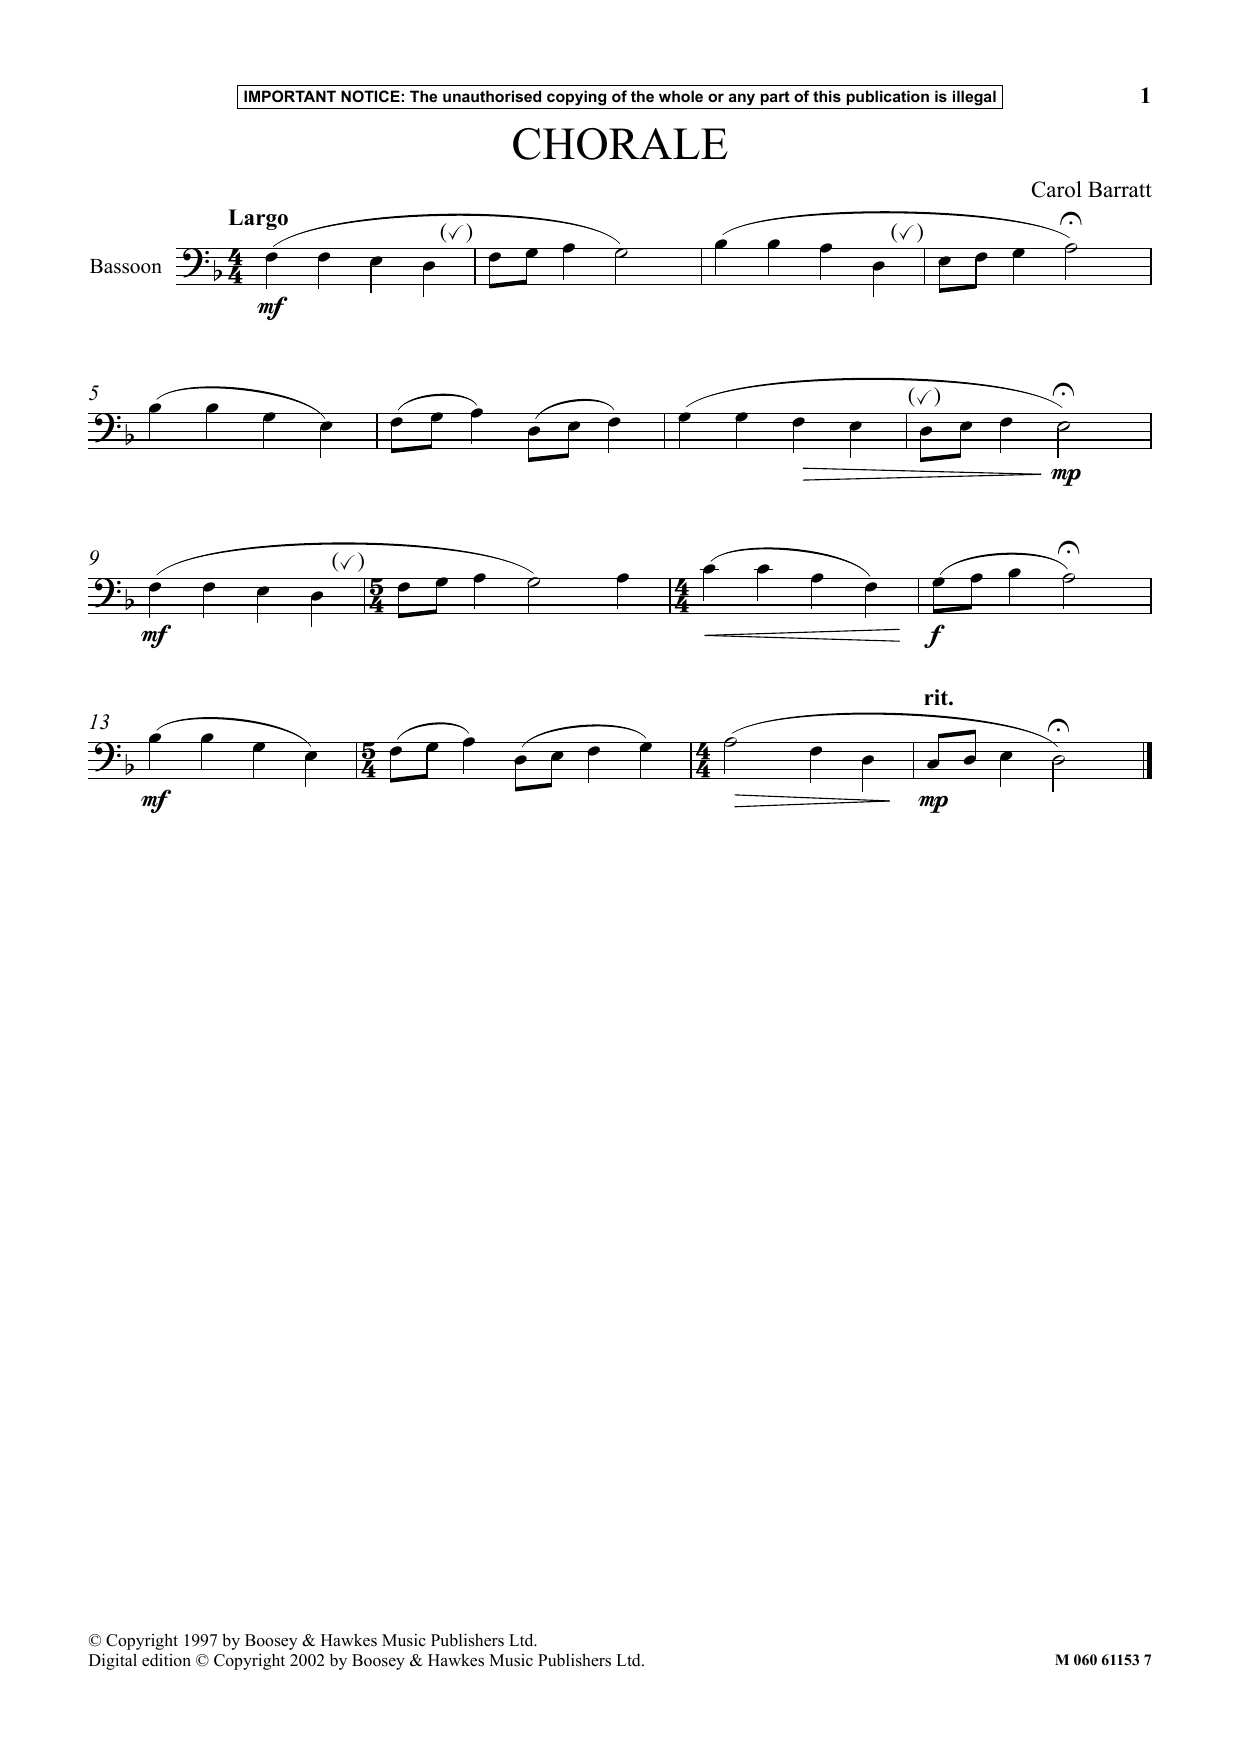 Carol Barratt Chorale Sheet Music Notes & Chords for Instrumental Solo - Download or Print PDF